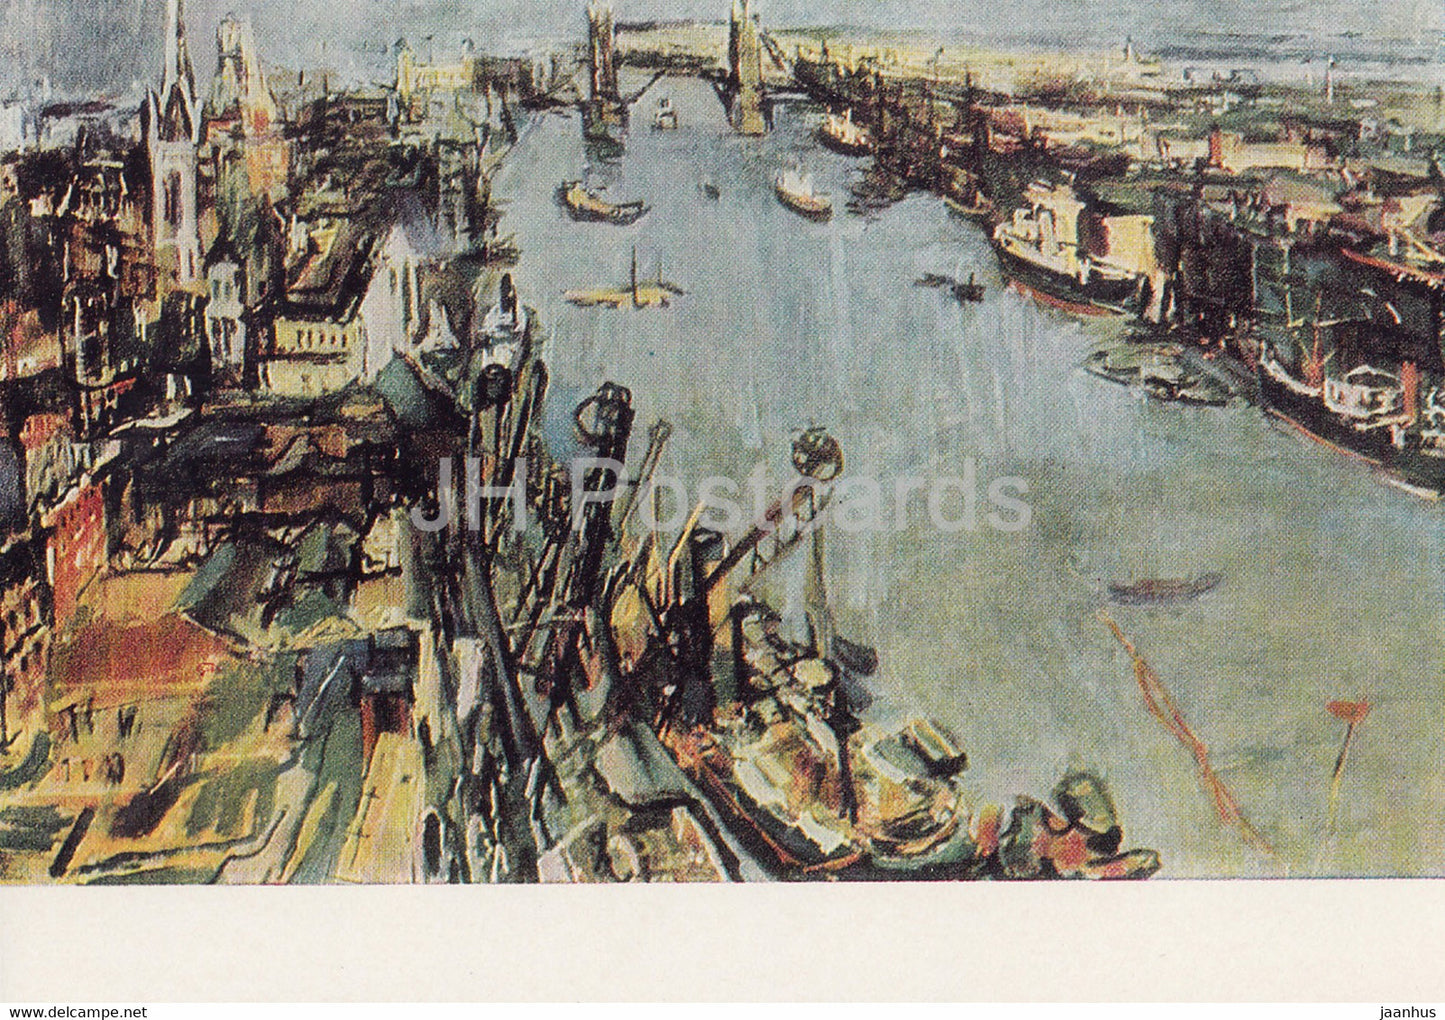 painting by Oskar Kokoschka - London - Tower Bridge - Austrian art - 1967 - Russia USSR - unused - JH Postcards